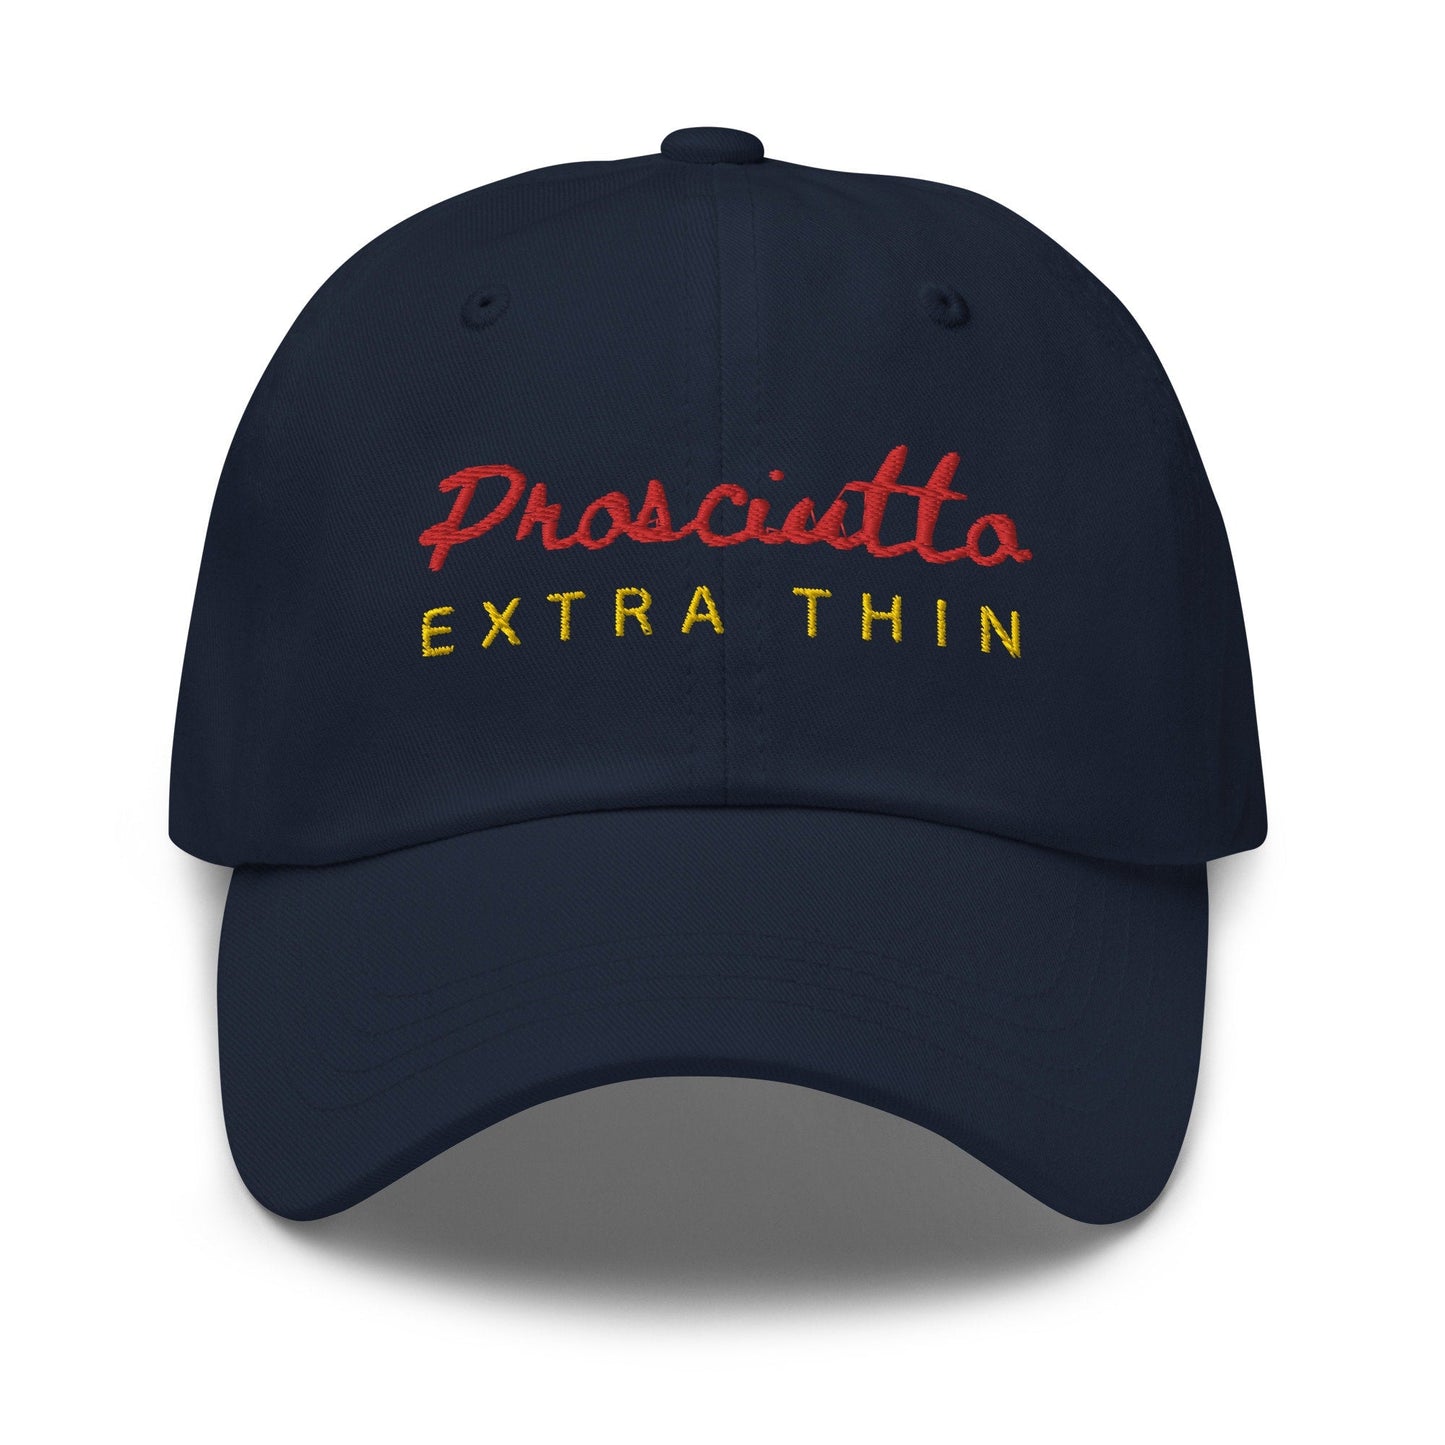 Prosciutto Dad Hat - Thinly Sliced Italian Ham Fans - Minimalist Cotton Embroidered Cap - Evilwater Originals